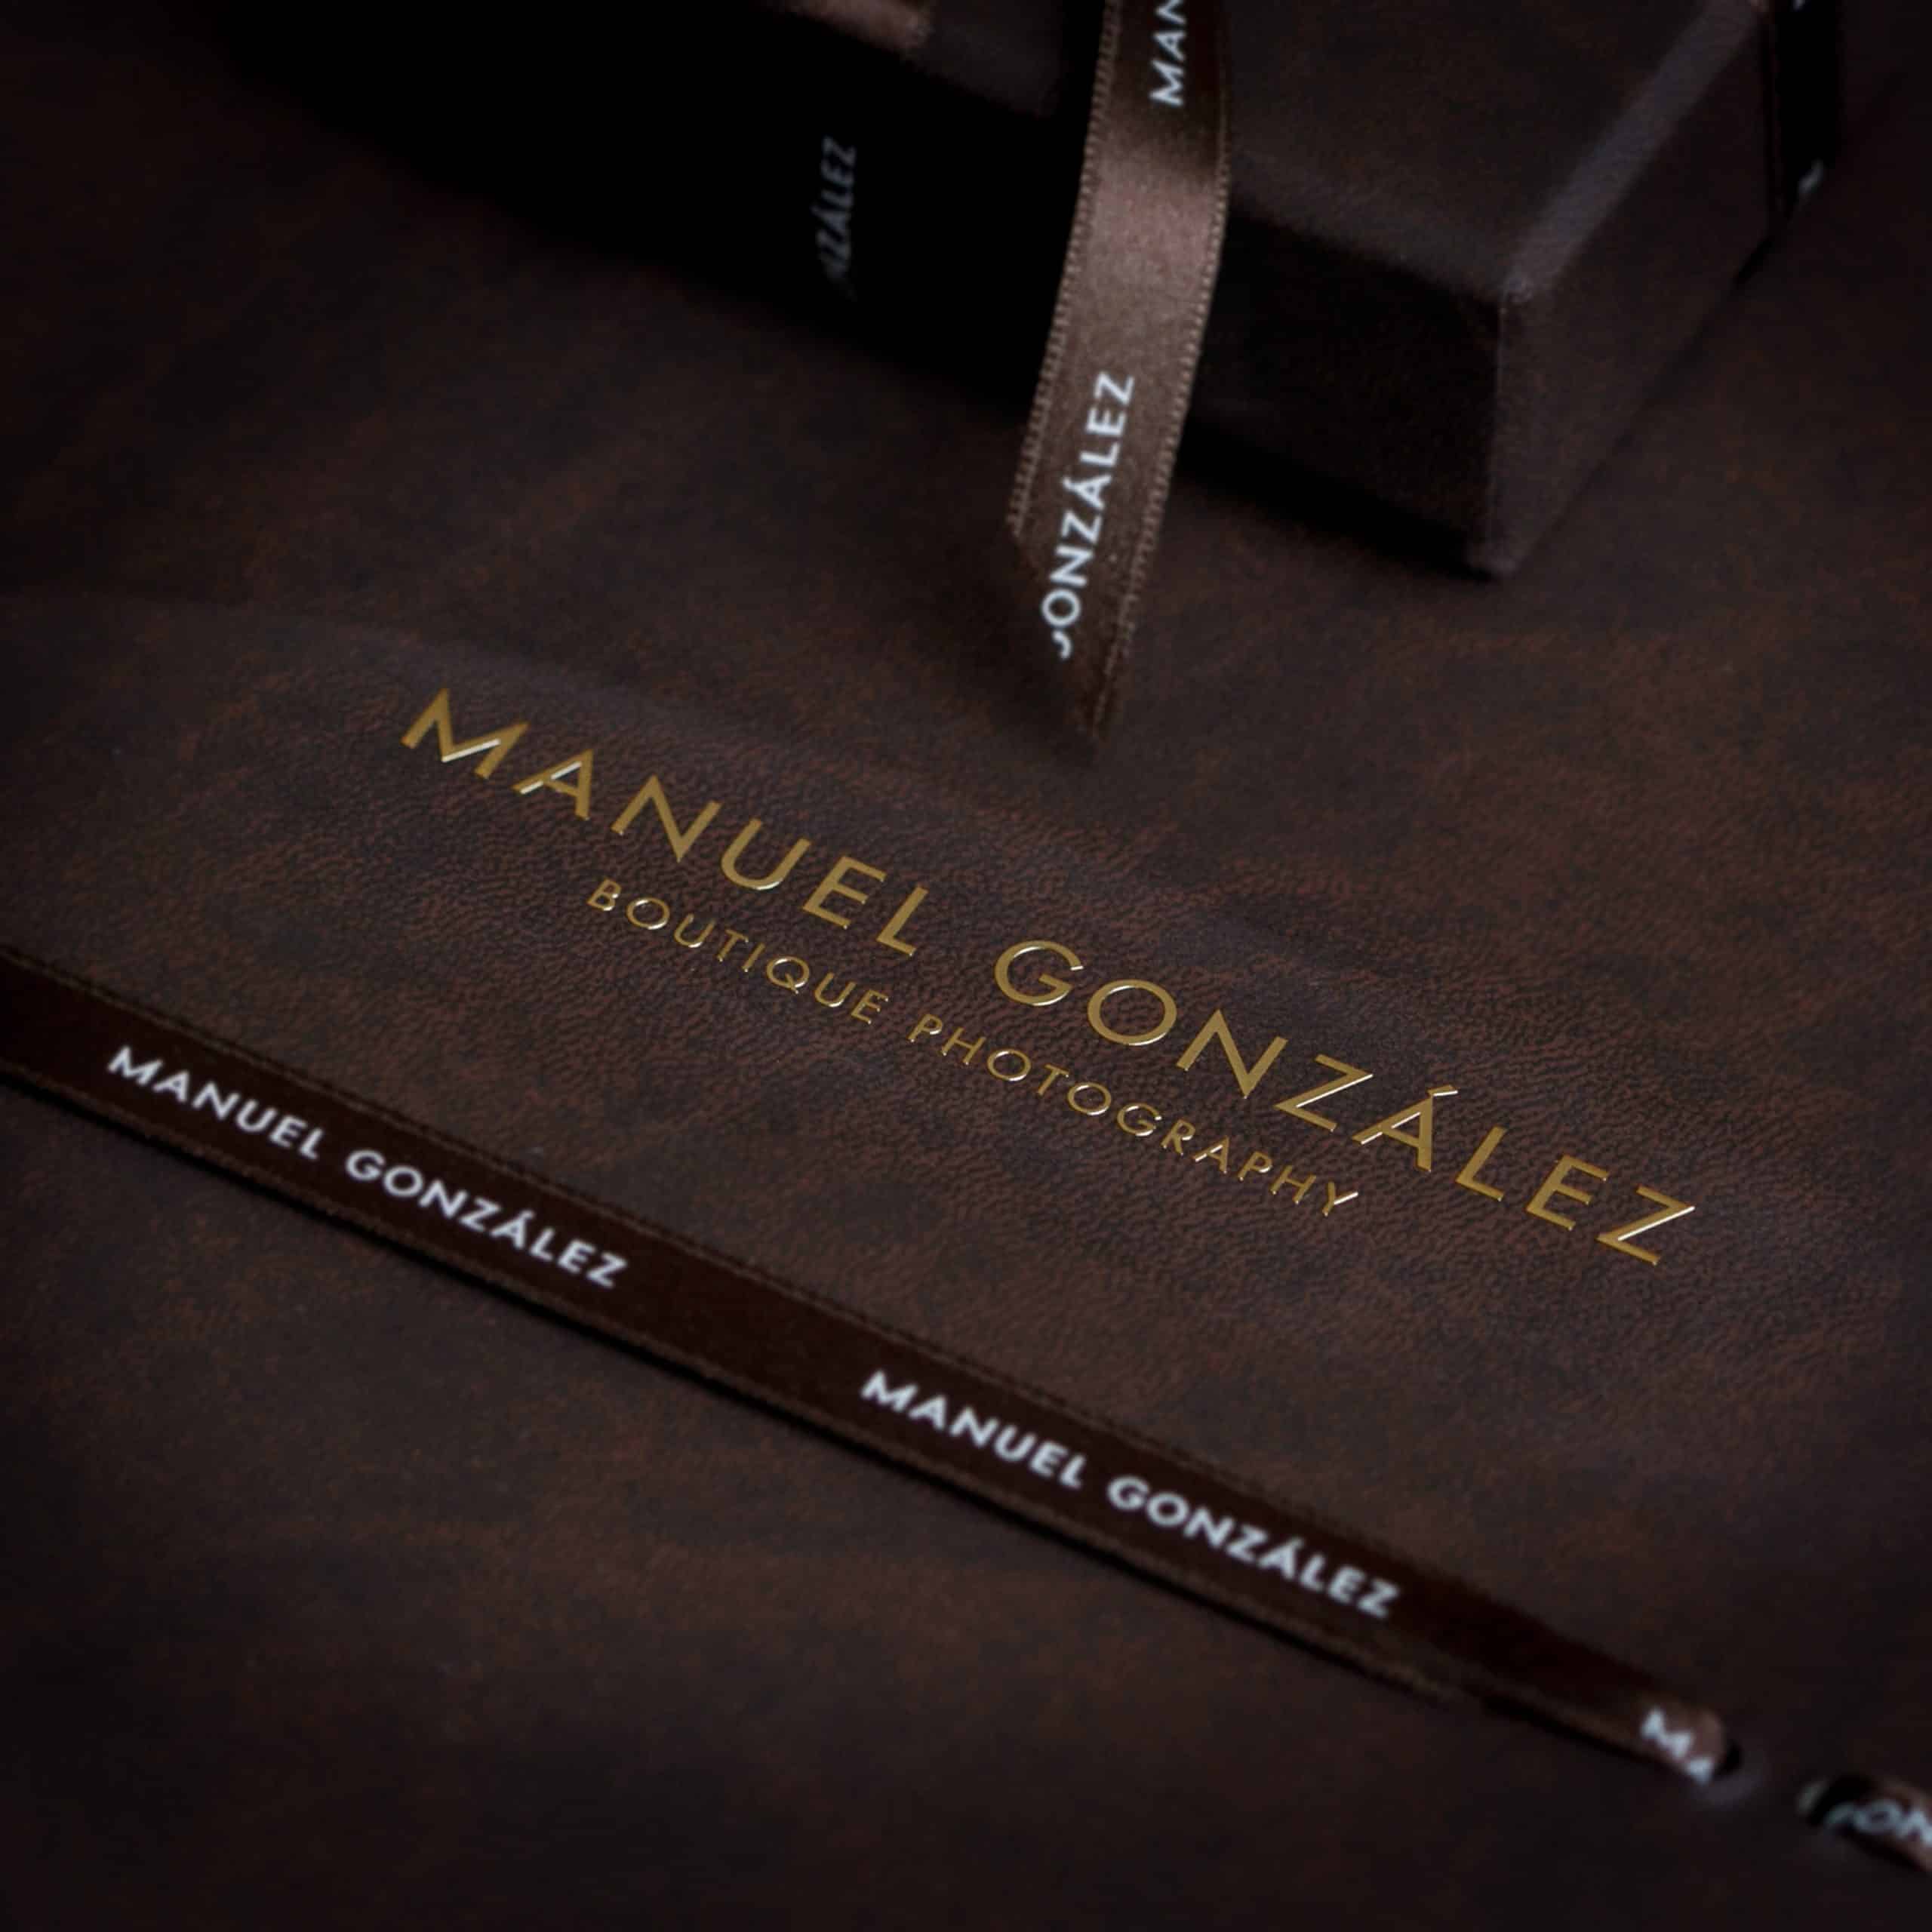 Packaging Manuel González Fotografía